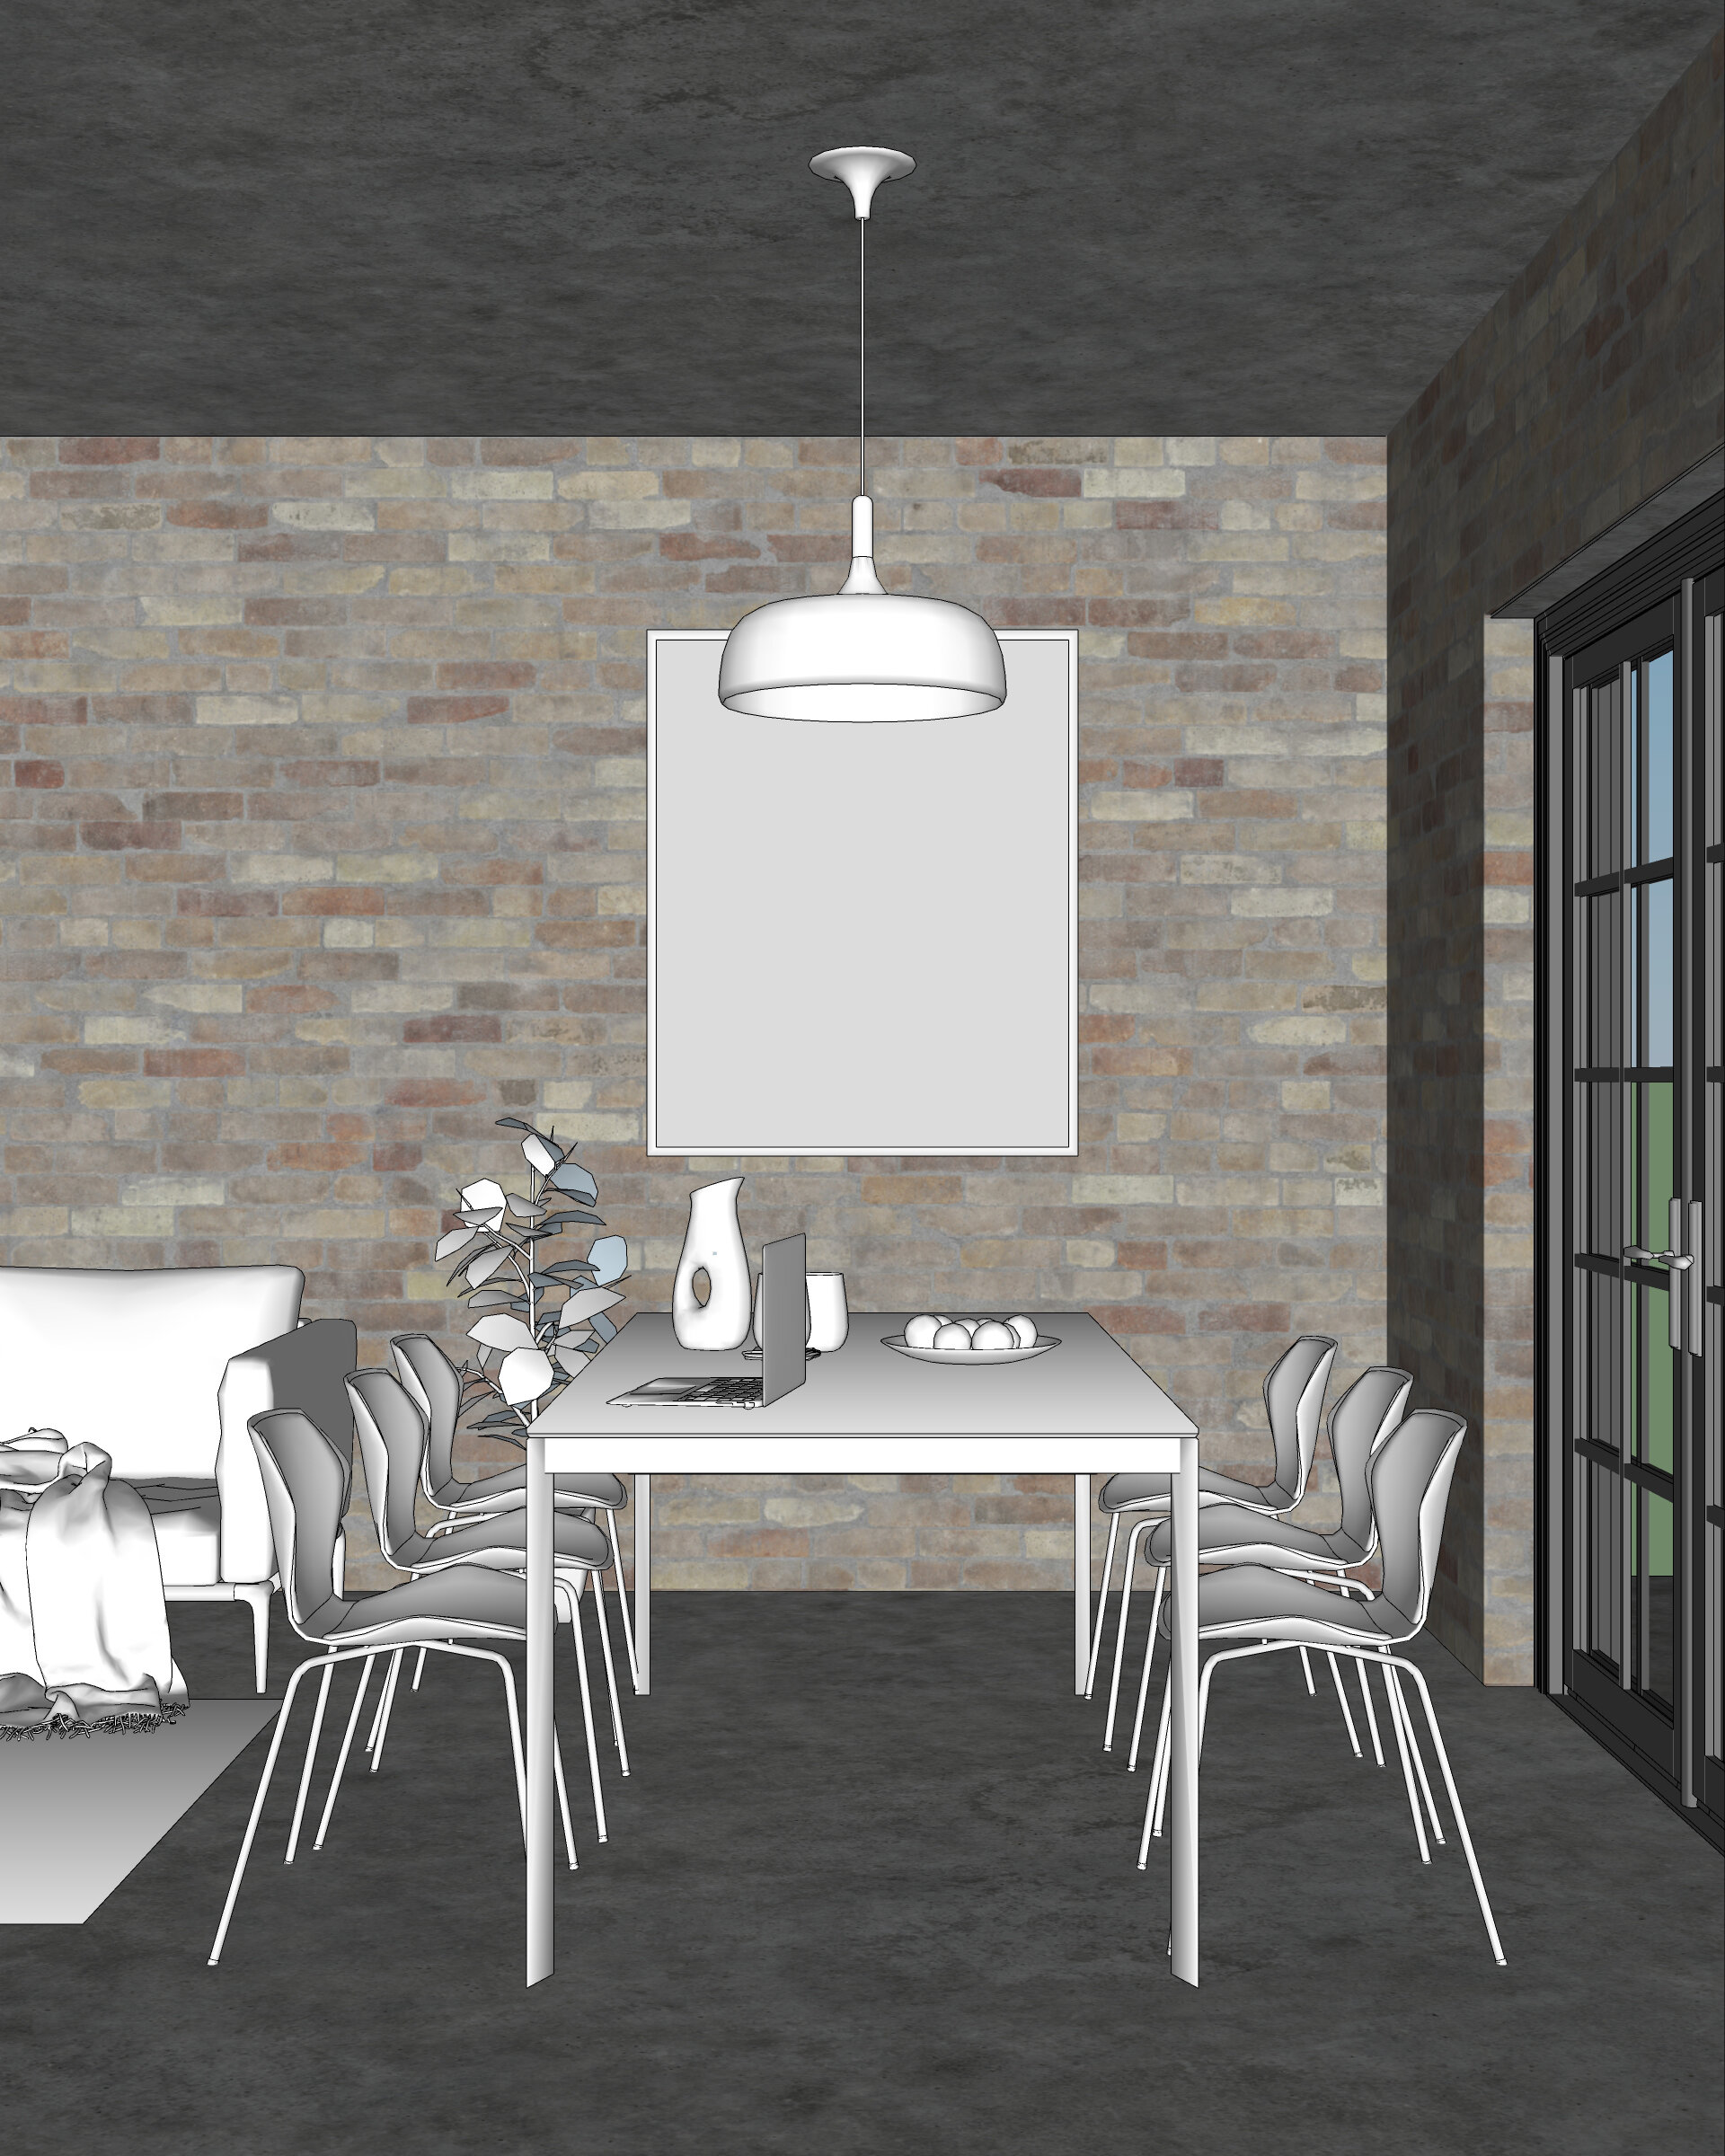 Industrial Dining Room Screenshot - Copy.jpg